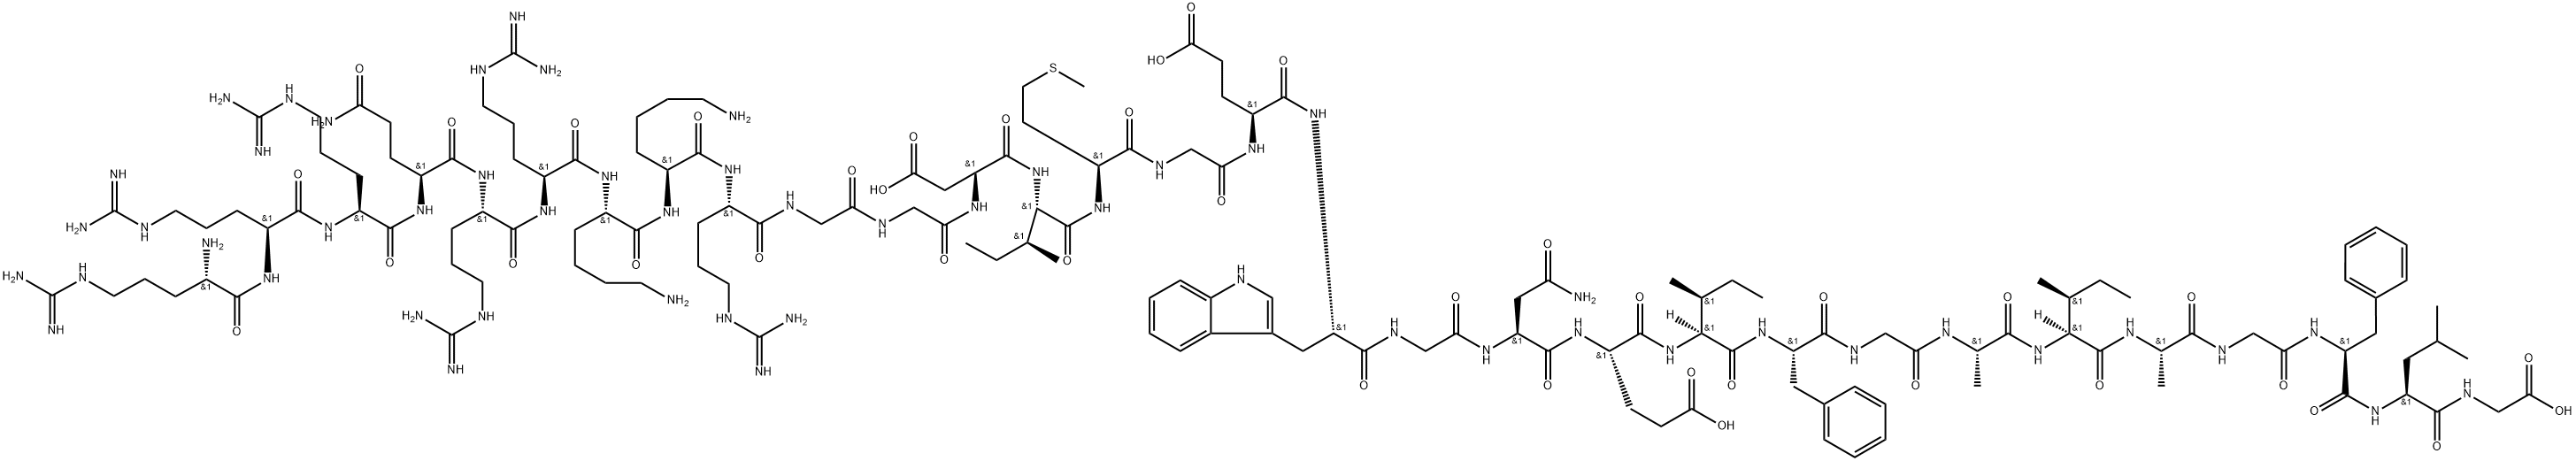 Glycine, L-arginyl-L-arginyl-L-arginyl-L-glutaminyl-L-arginyl-L-arginyl-L-lysyl-L-lysyl-L-arginylglycylglycyl-L-α-aspartyl-L-isoleucyl-L-methionylglycyl-L-α-glutamyl-L-tryptophylglycyl-L-asparaginyl-L-α-glutamyl-L-isoleucyl-L-phenylalanylglycyl-L-alanyl-L-isoleucyl-L-alanylglycyl-L-phenylalanyl-L-leucyl- Structure